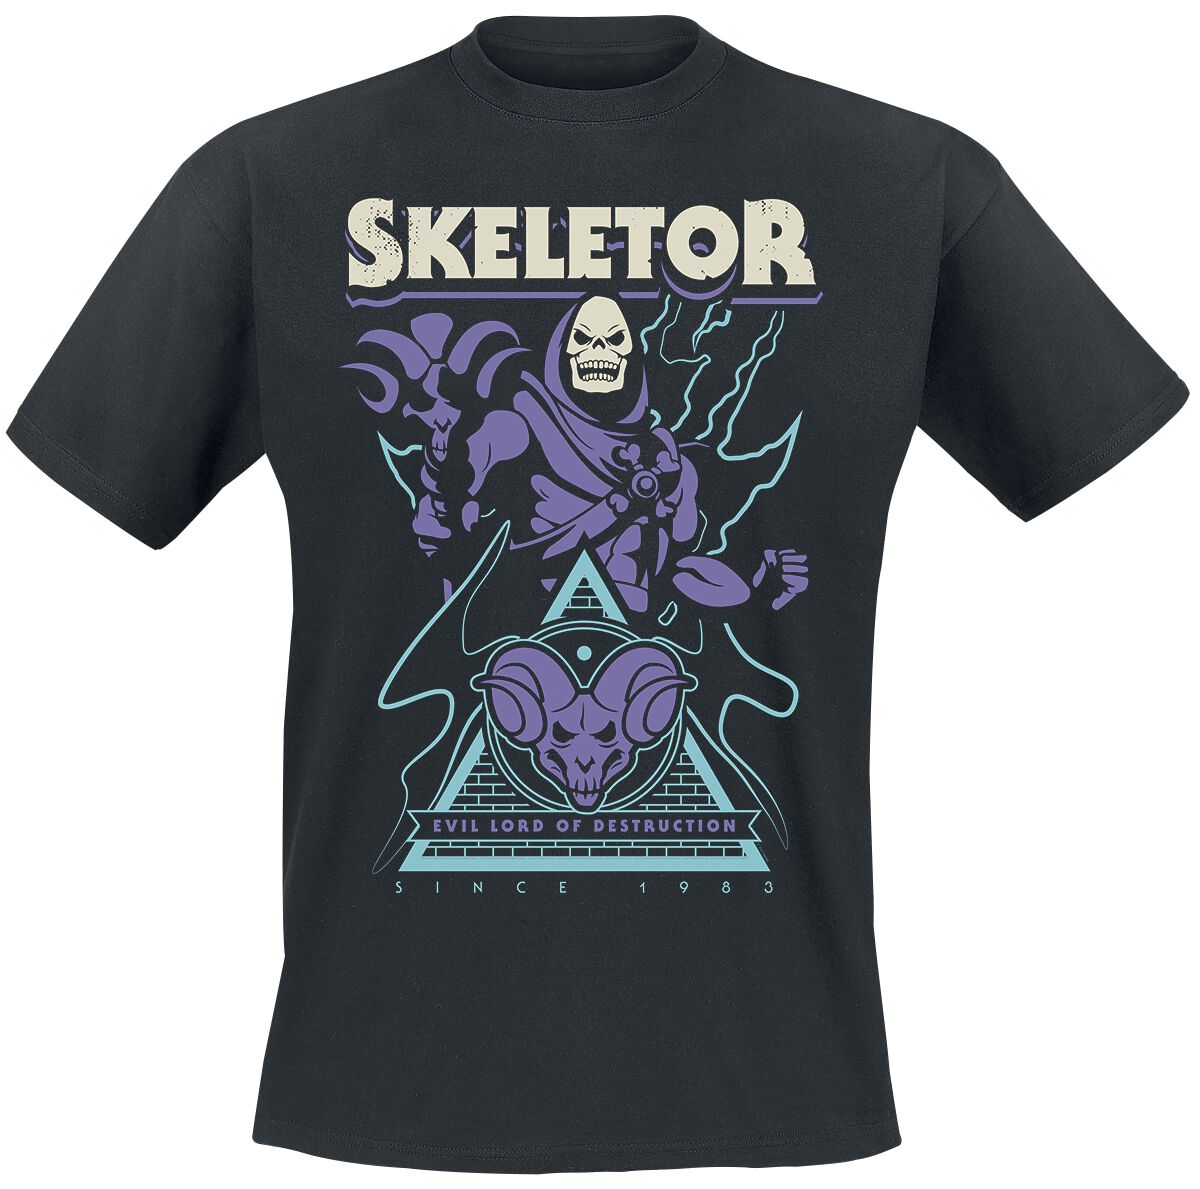 He-Man Skeletor - Pyramide T-Shirt schwarz in 4XL